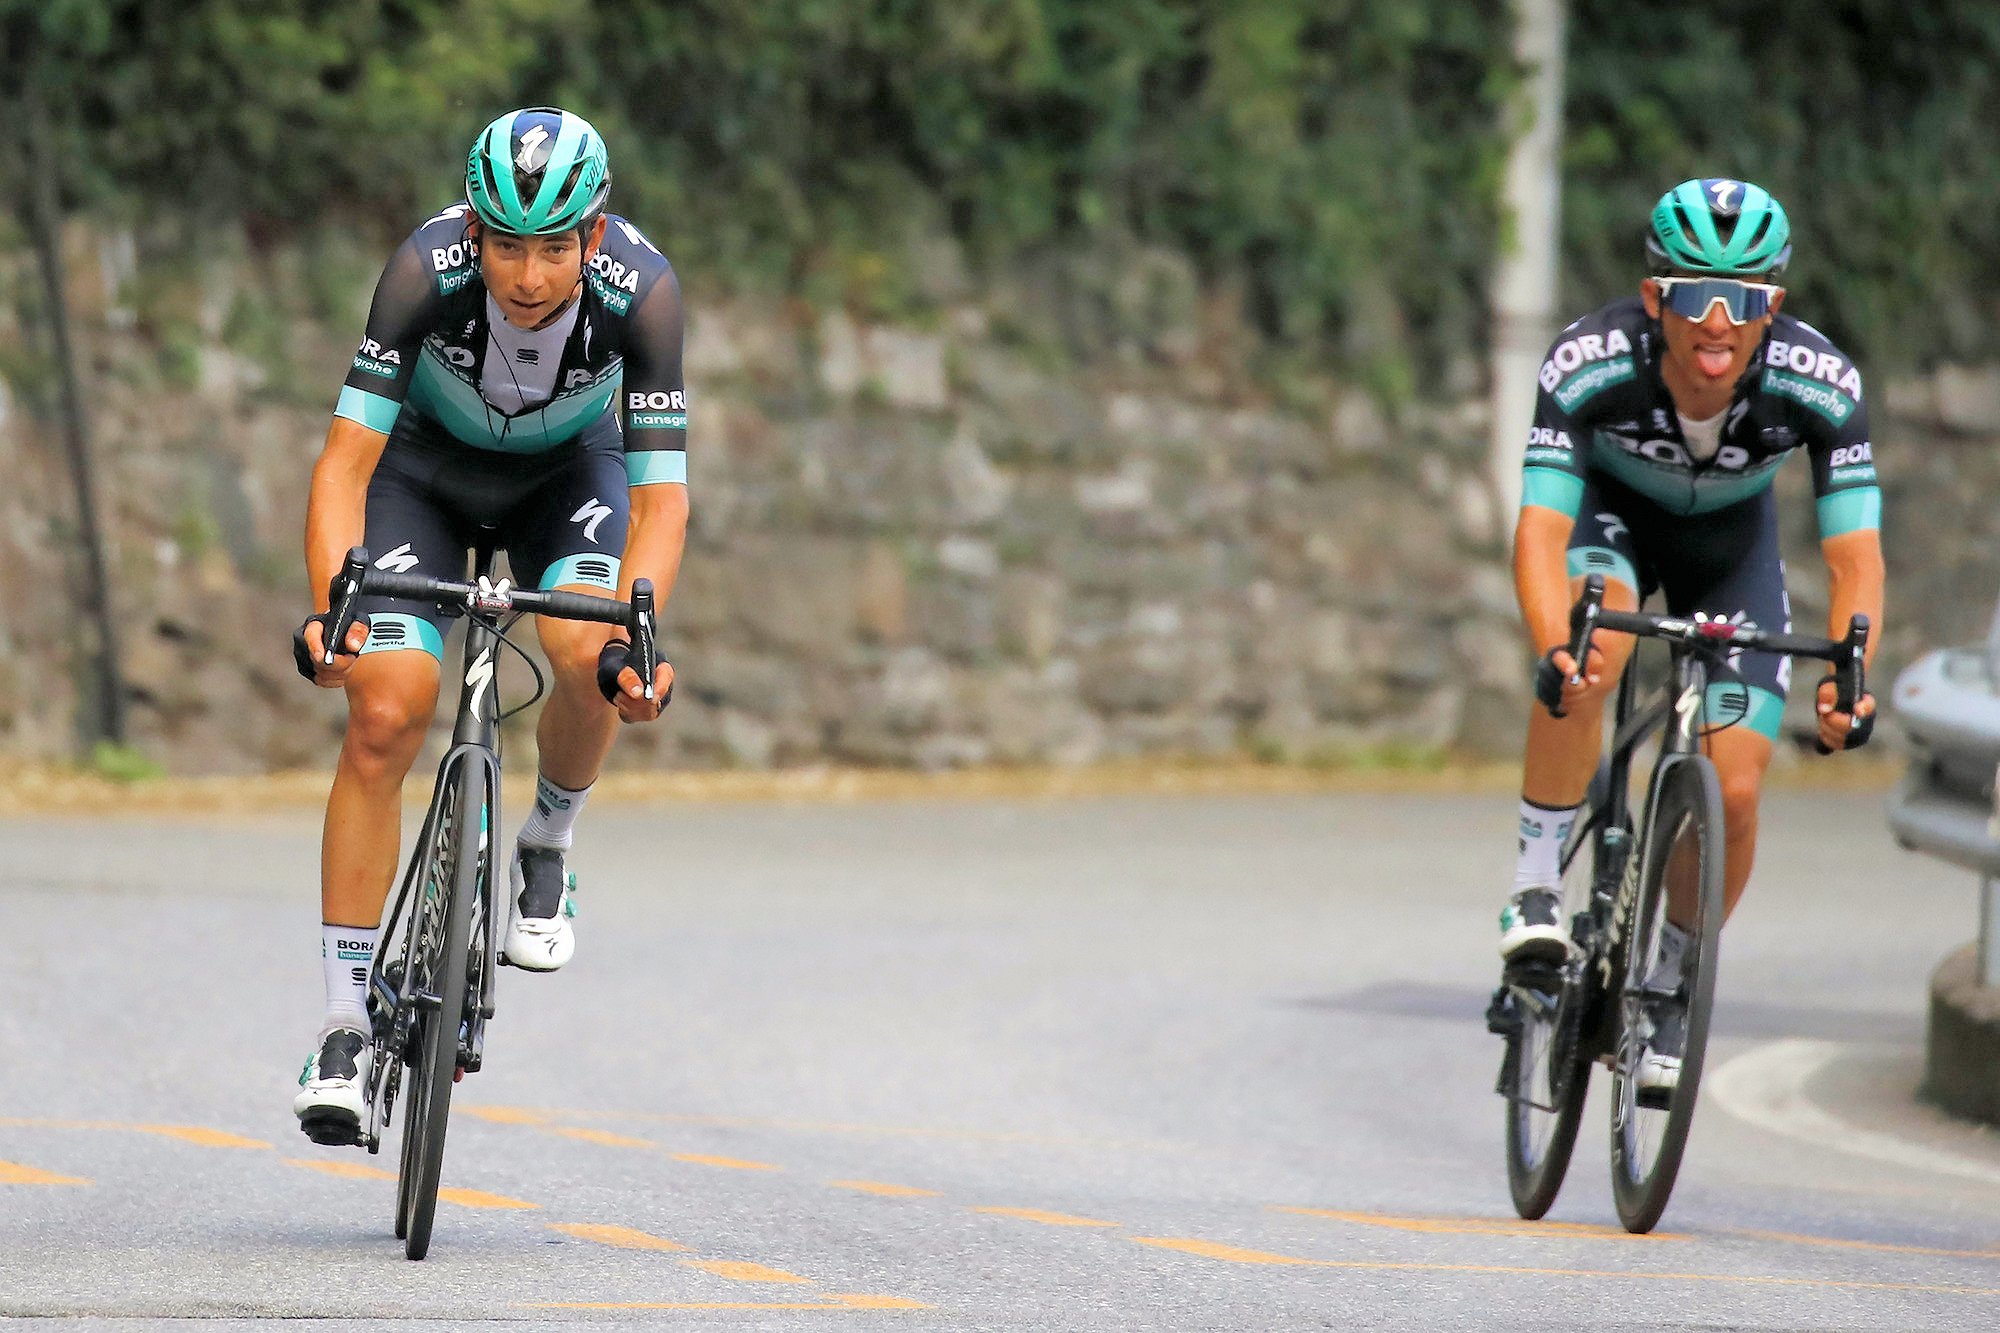 Vuelta a Espana 2019. Majka i Bennett na czele Bora-hansgrohe